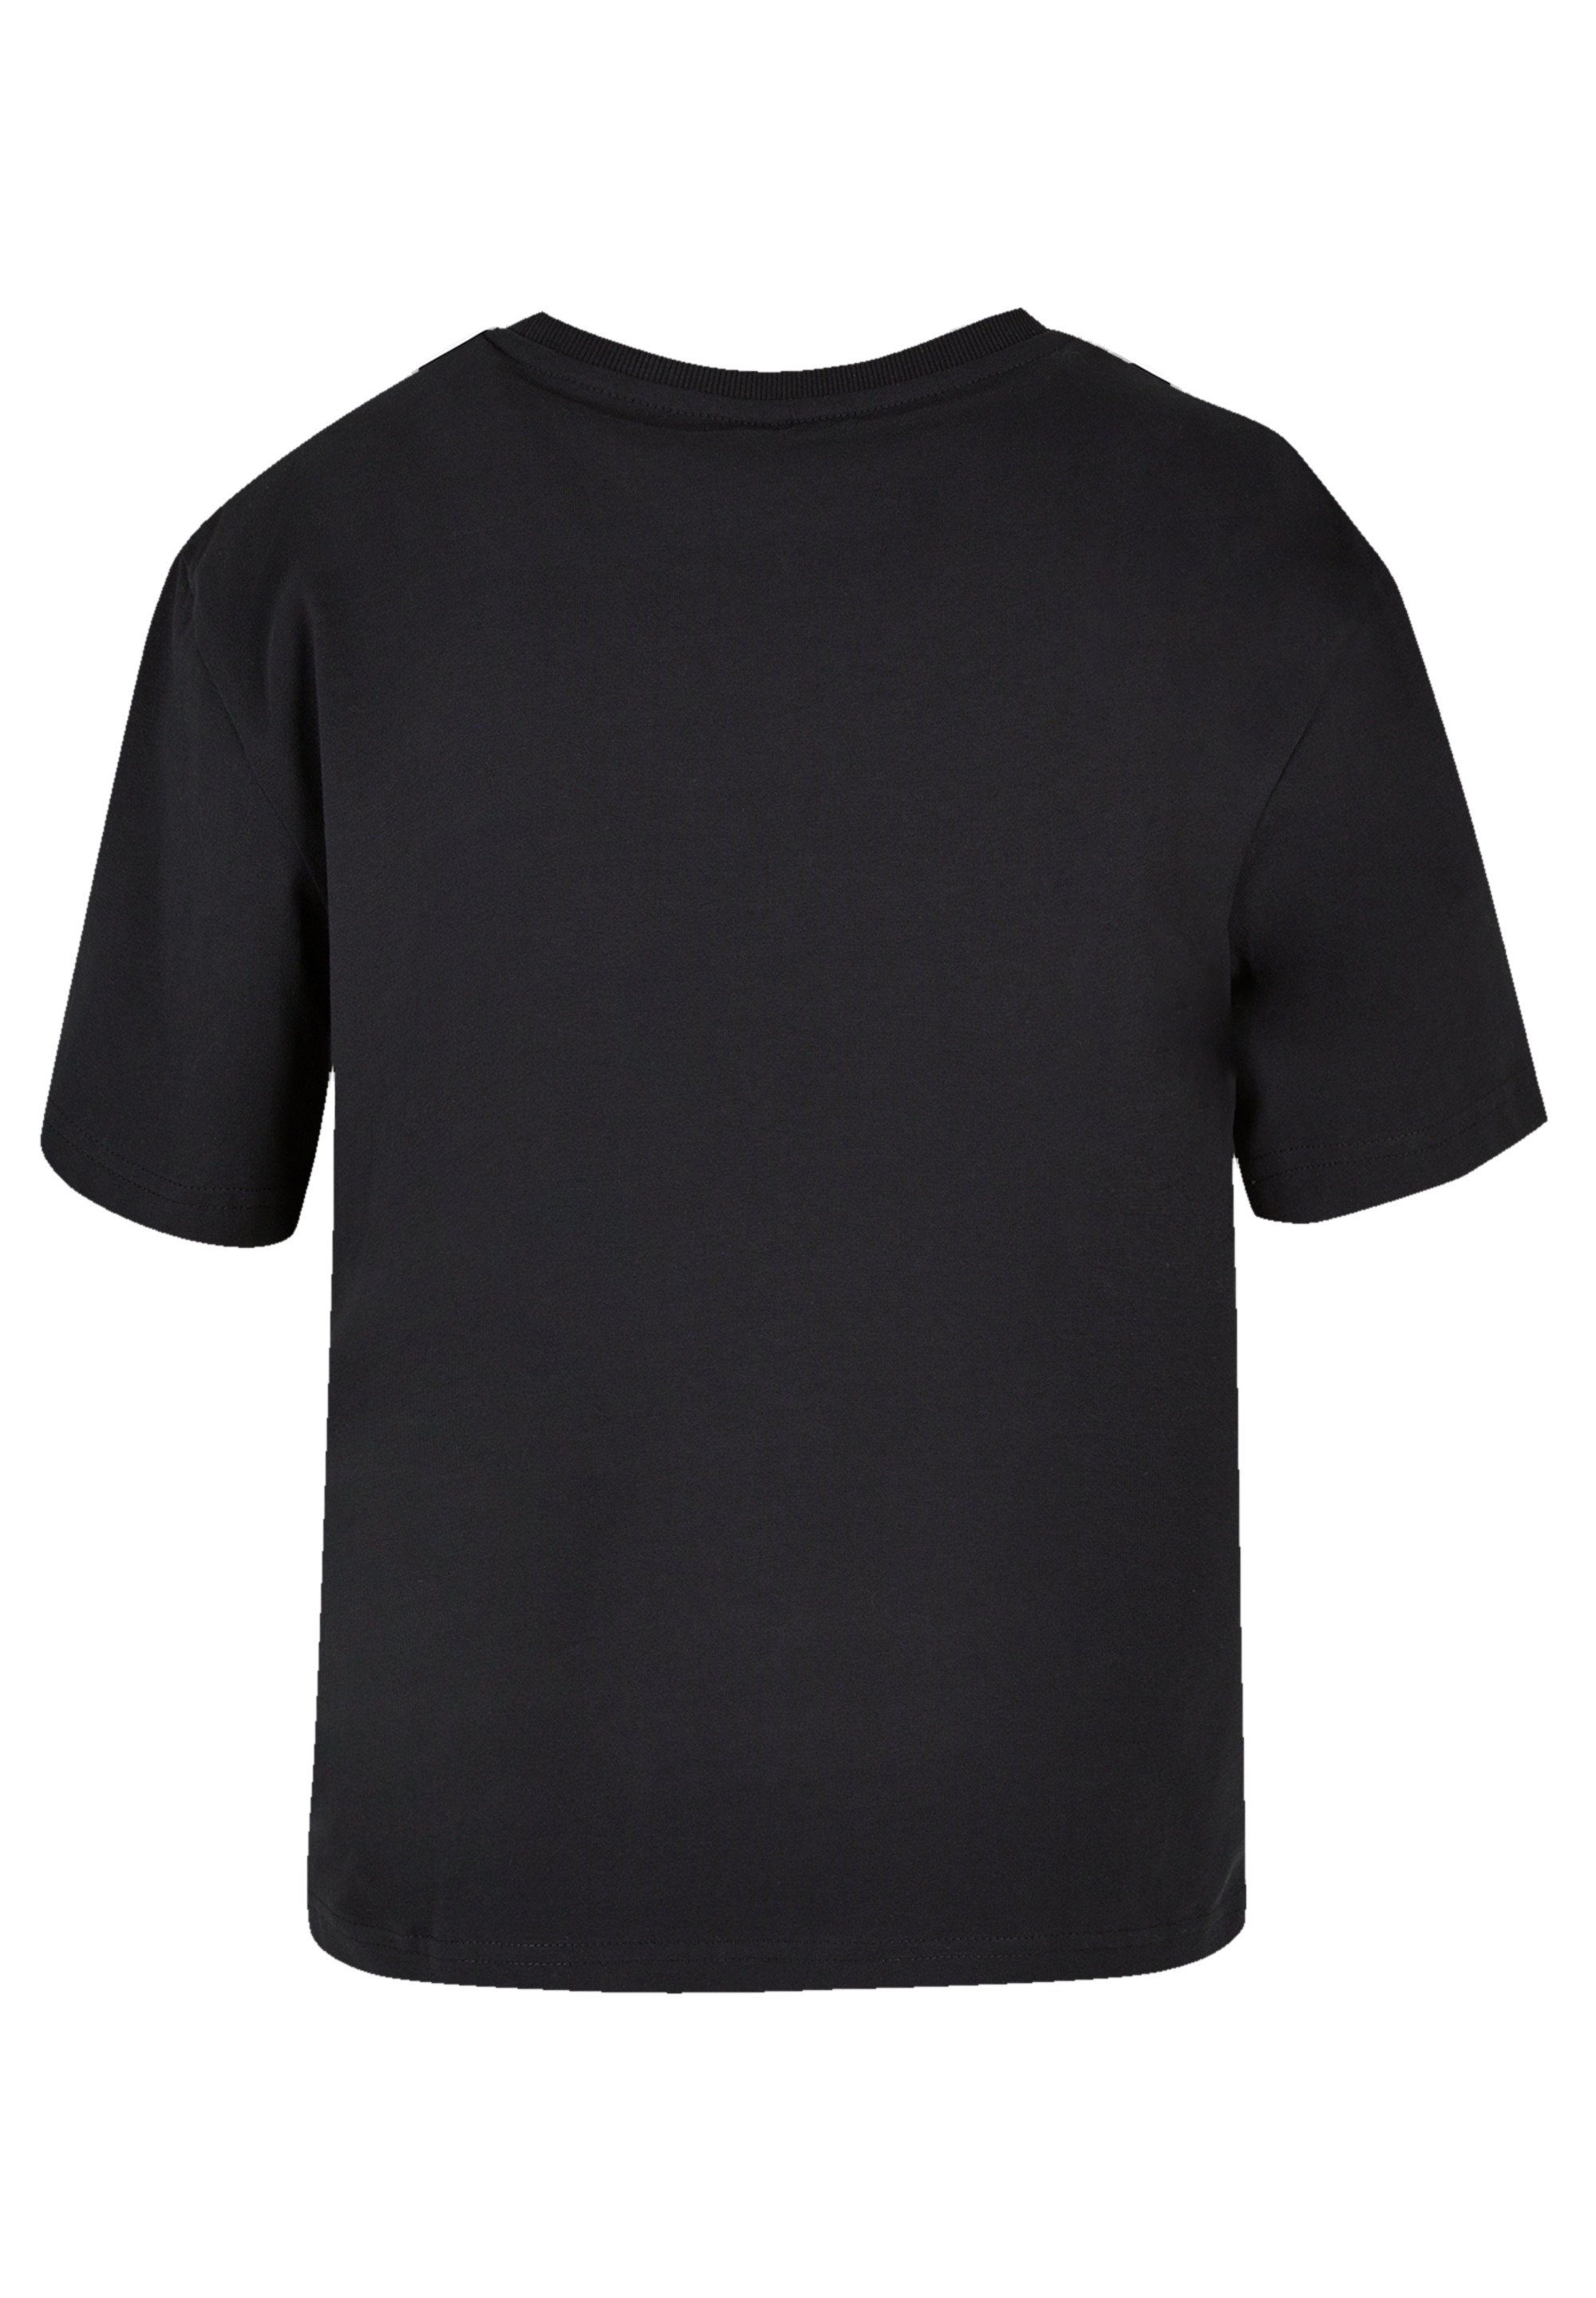 F4NT4STIC T-Shirt Ramones Band EAGLE Rock-Musik Band, VINTAGE Musik Rock SEAL Premium Qualität